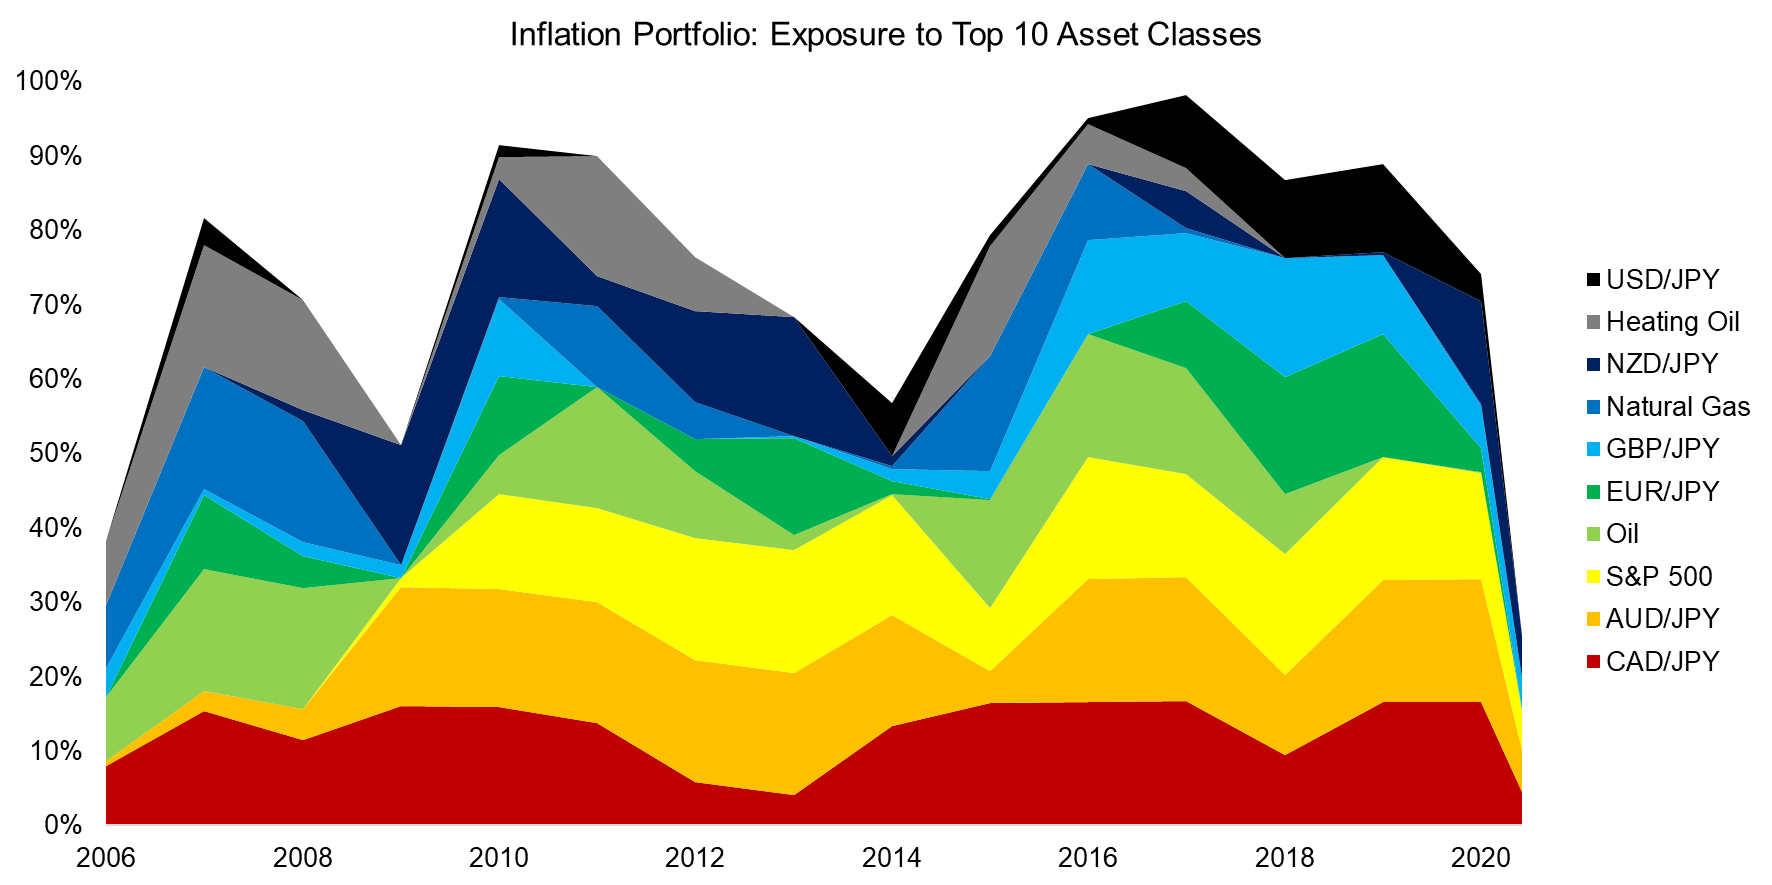 Inflation Portfolio Exposure to Top 10 Asset Classes